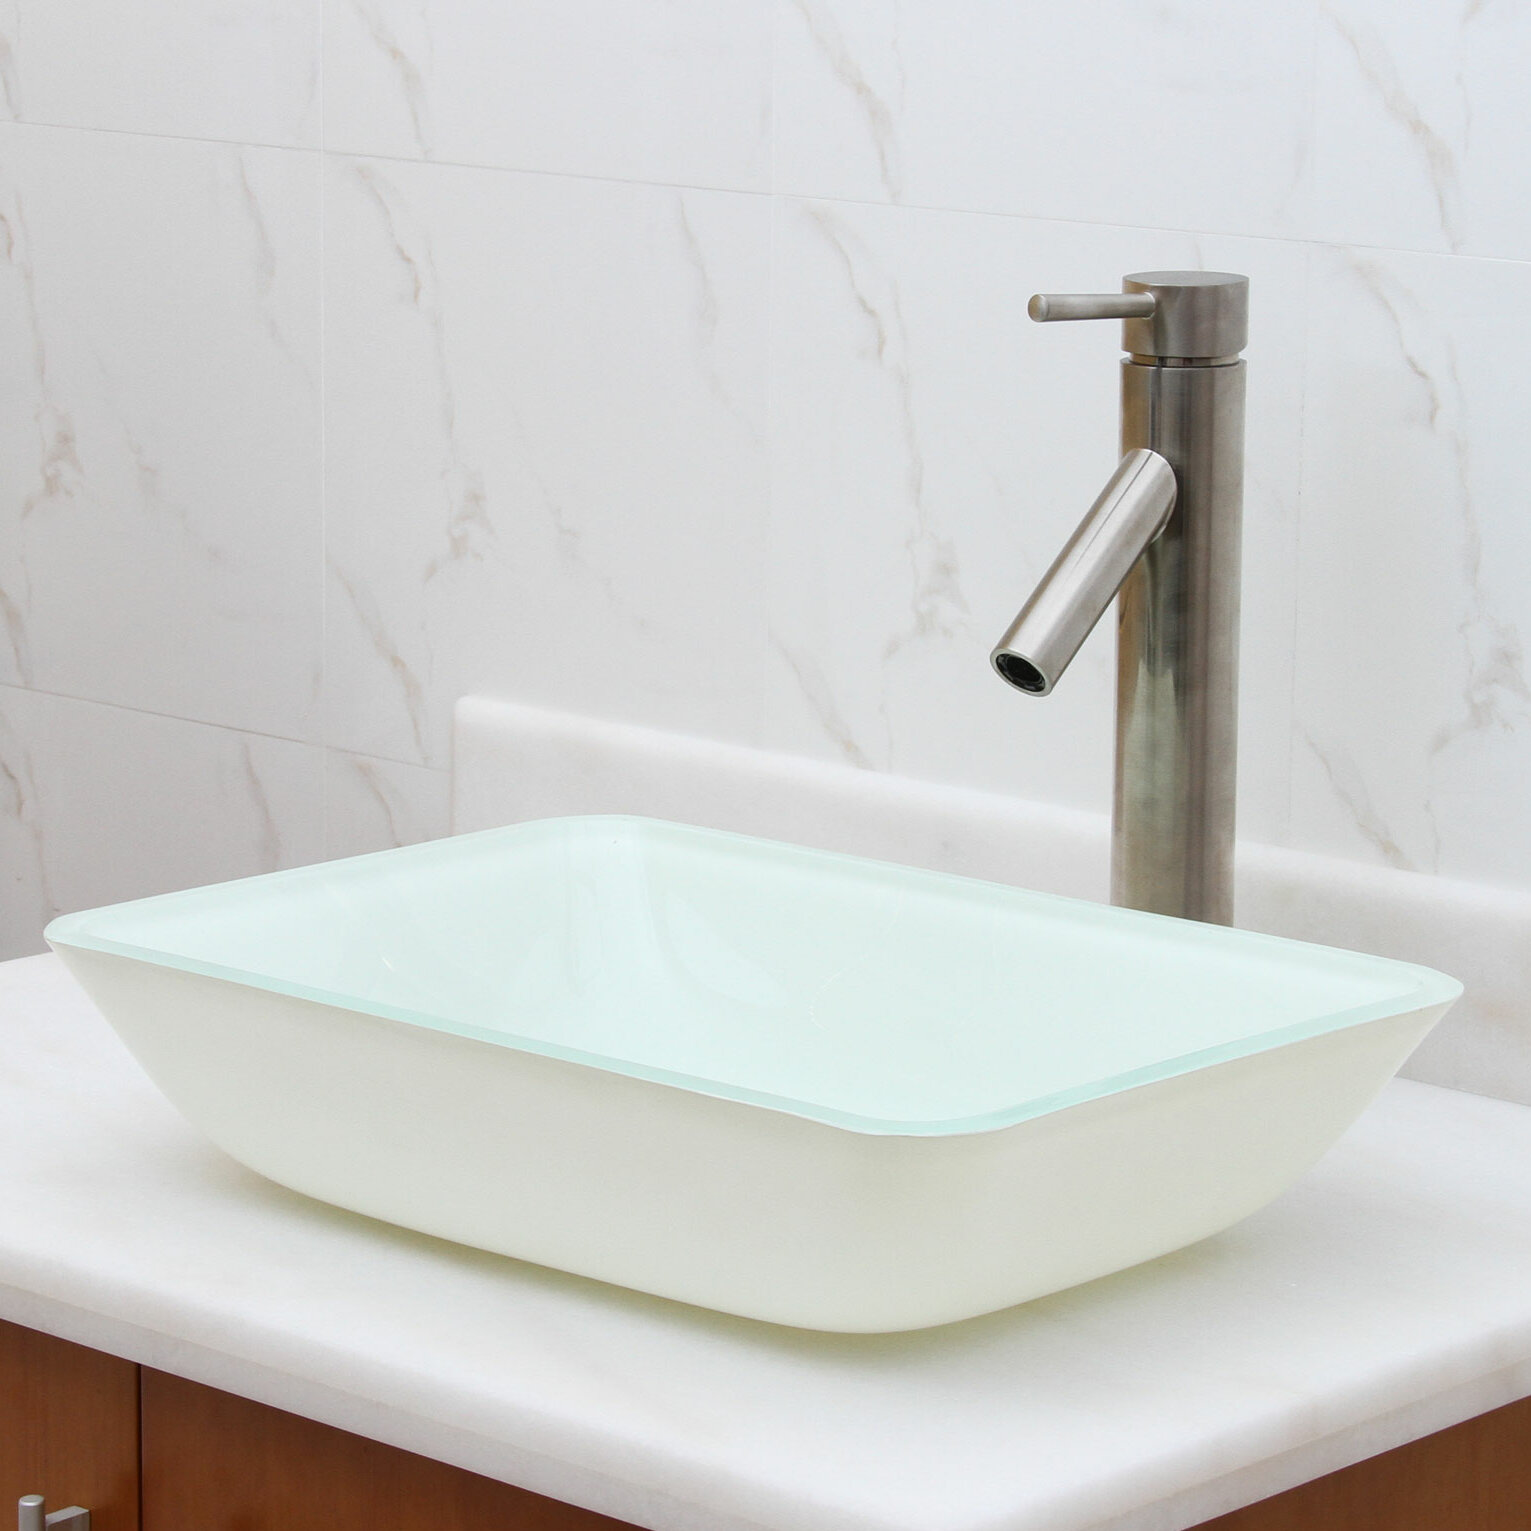 Elimaxs Elite Glass Rectangular Vessel Bathroom Sink Reviews Wayfair